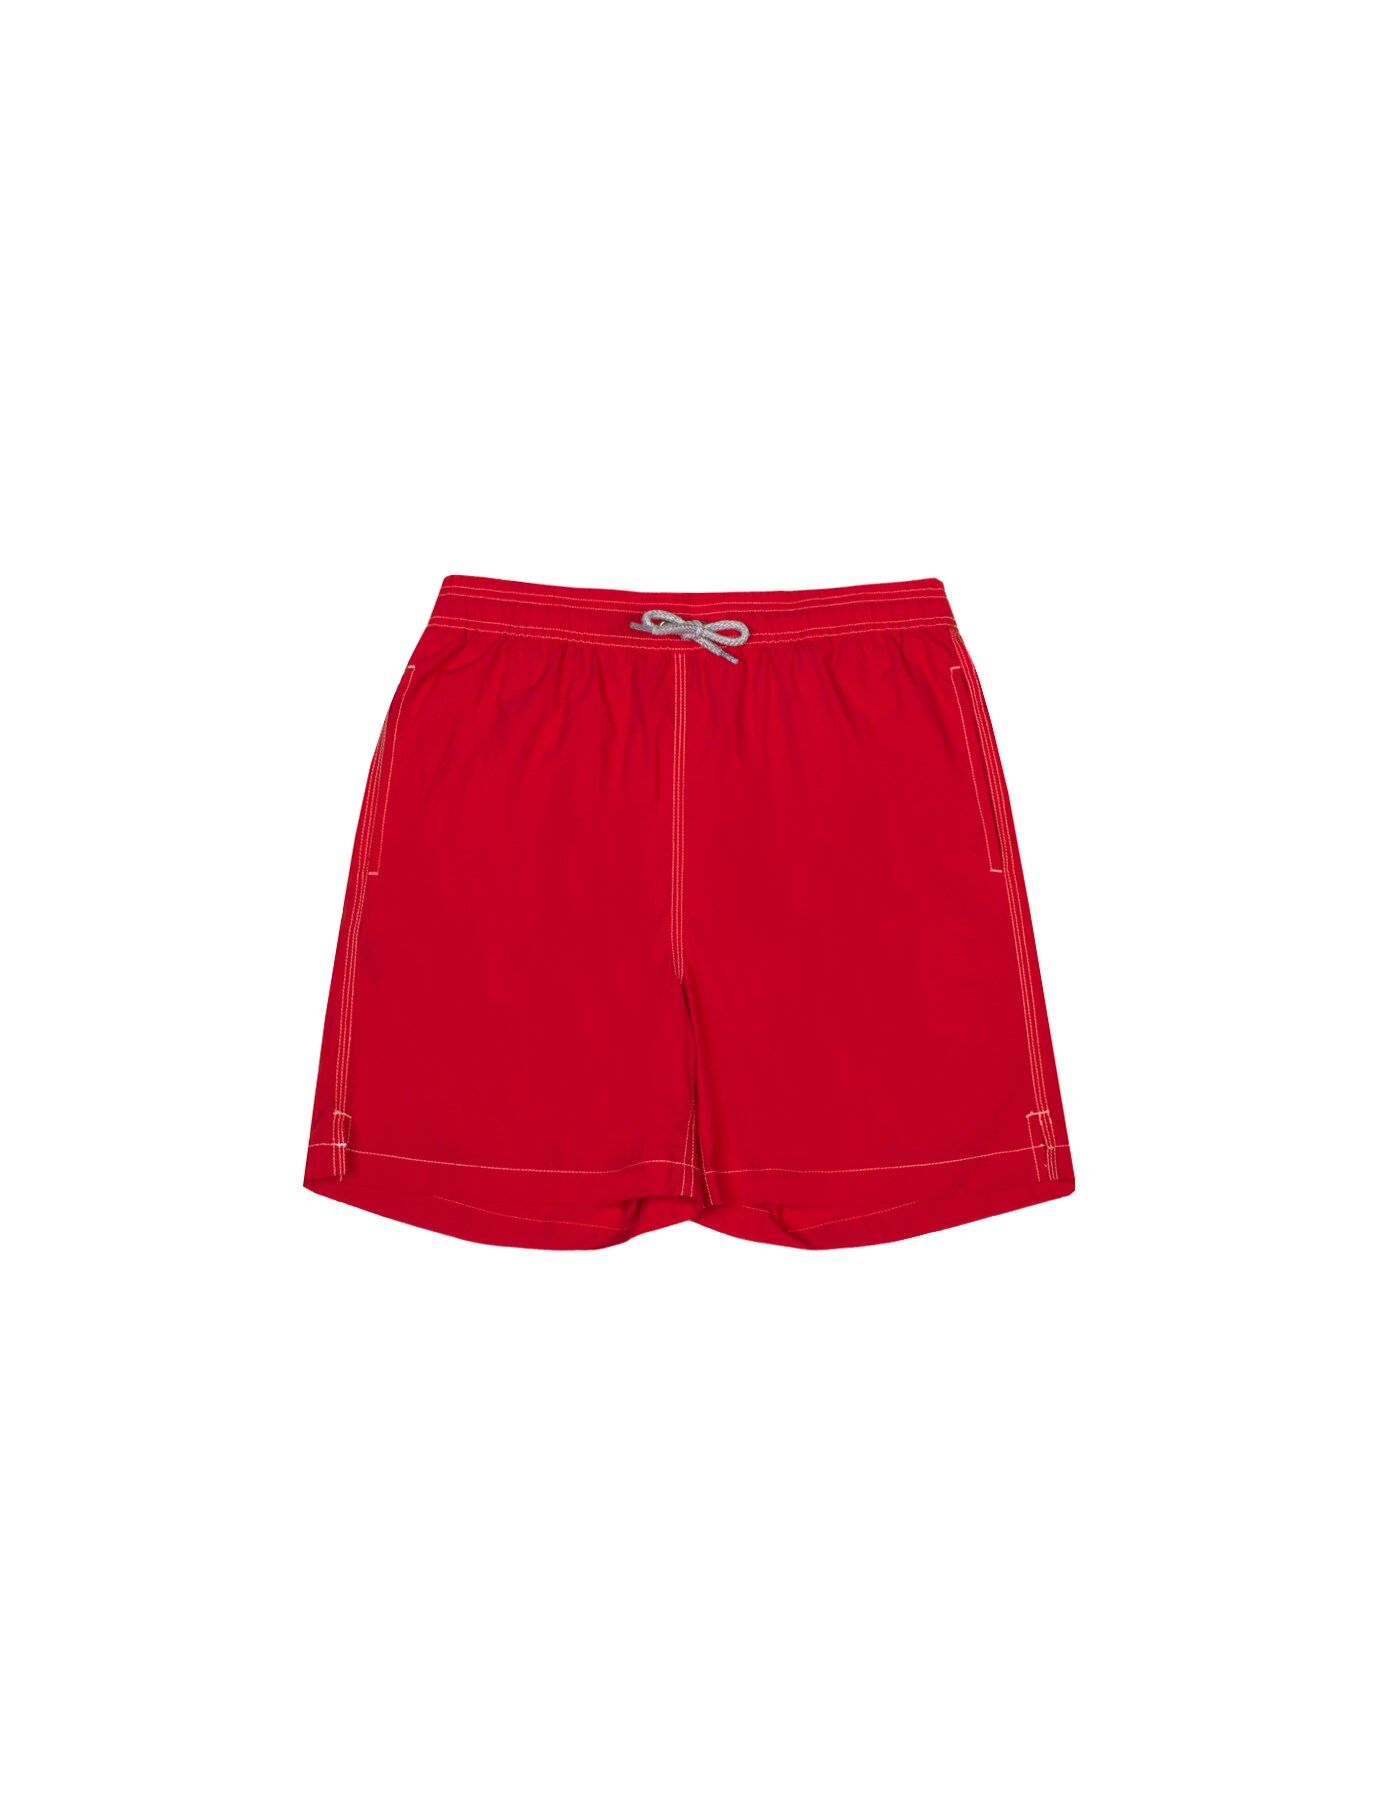 Hawes & Curtis Men's Garment Dye Swim Shorts in Red   Large   Hawes & Curtis